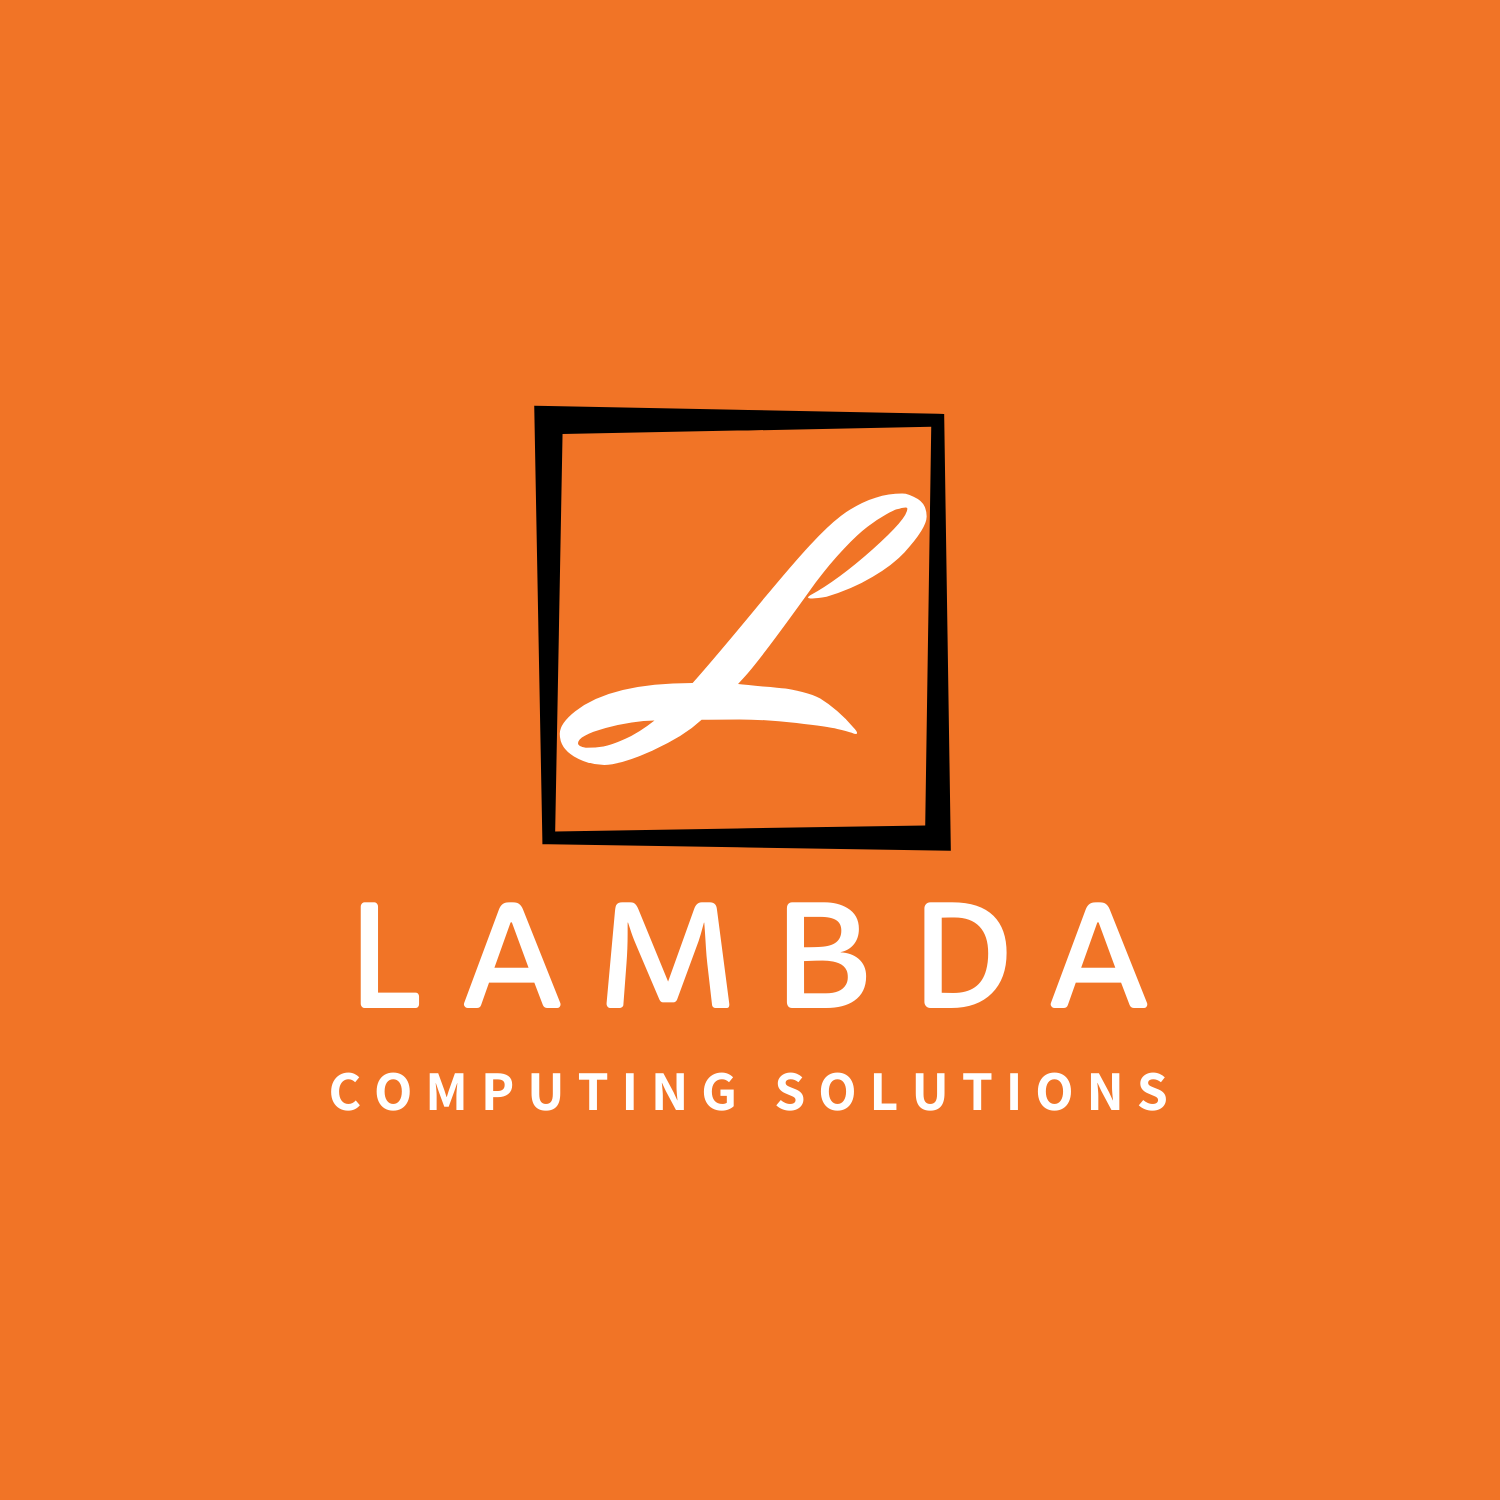 Lambda Computing Solutions (s) Pte. Ltd. logo